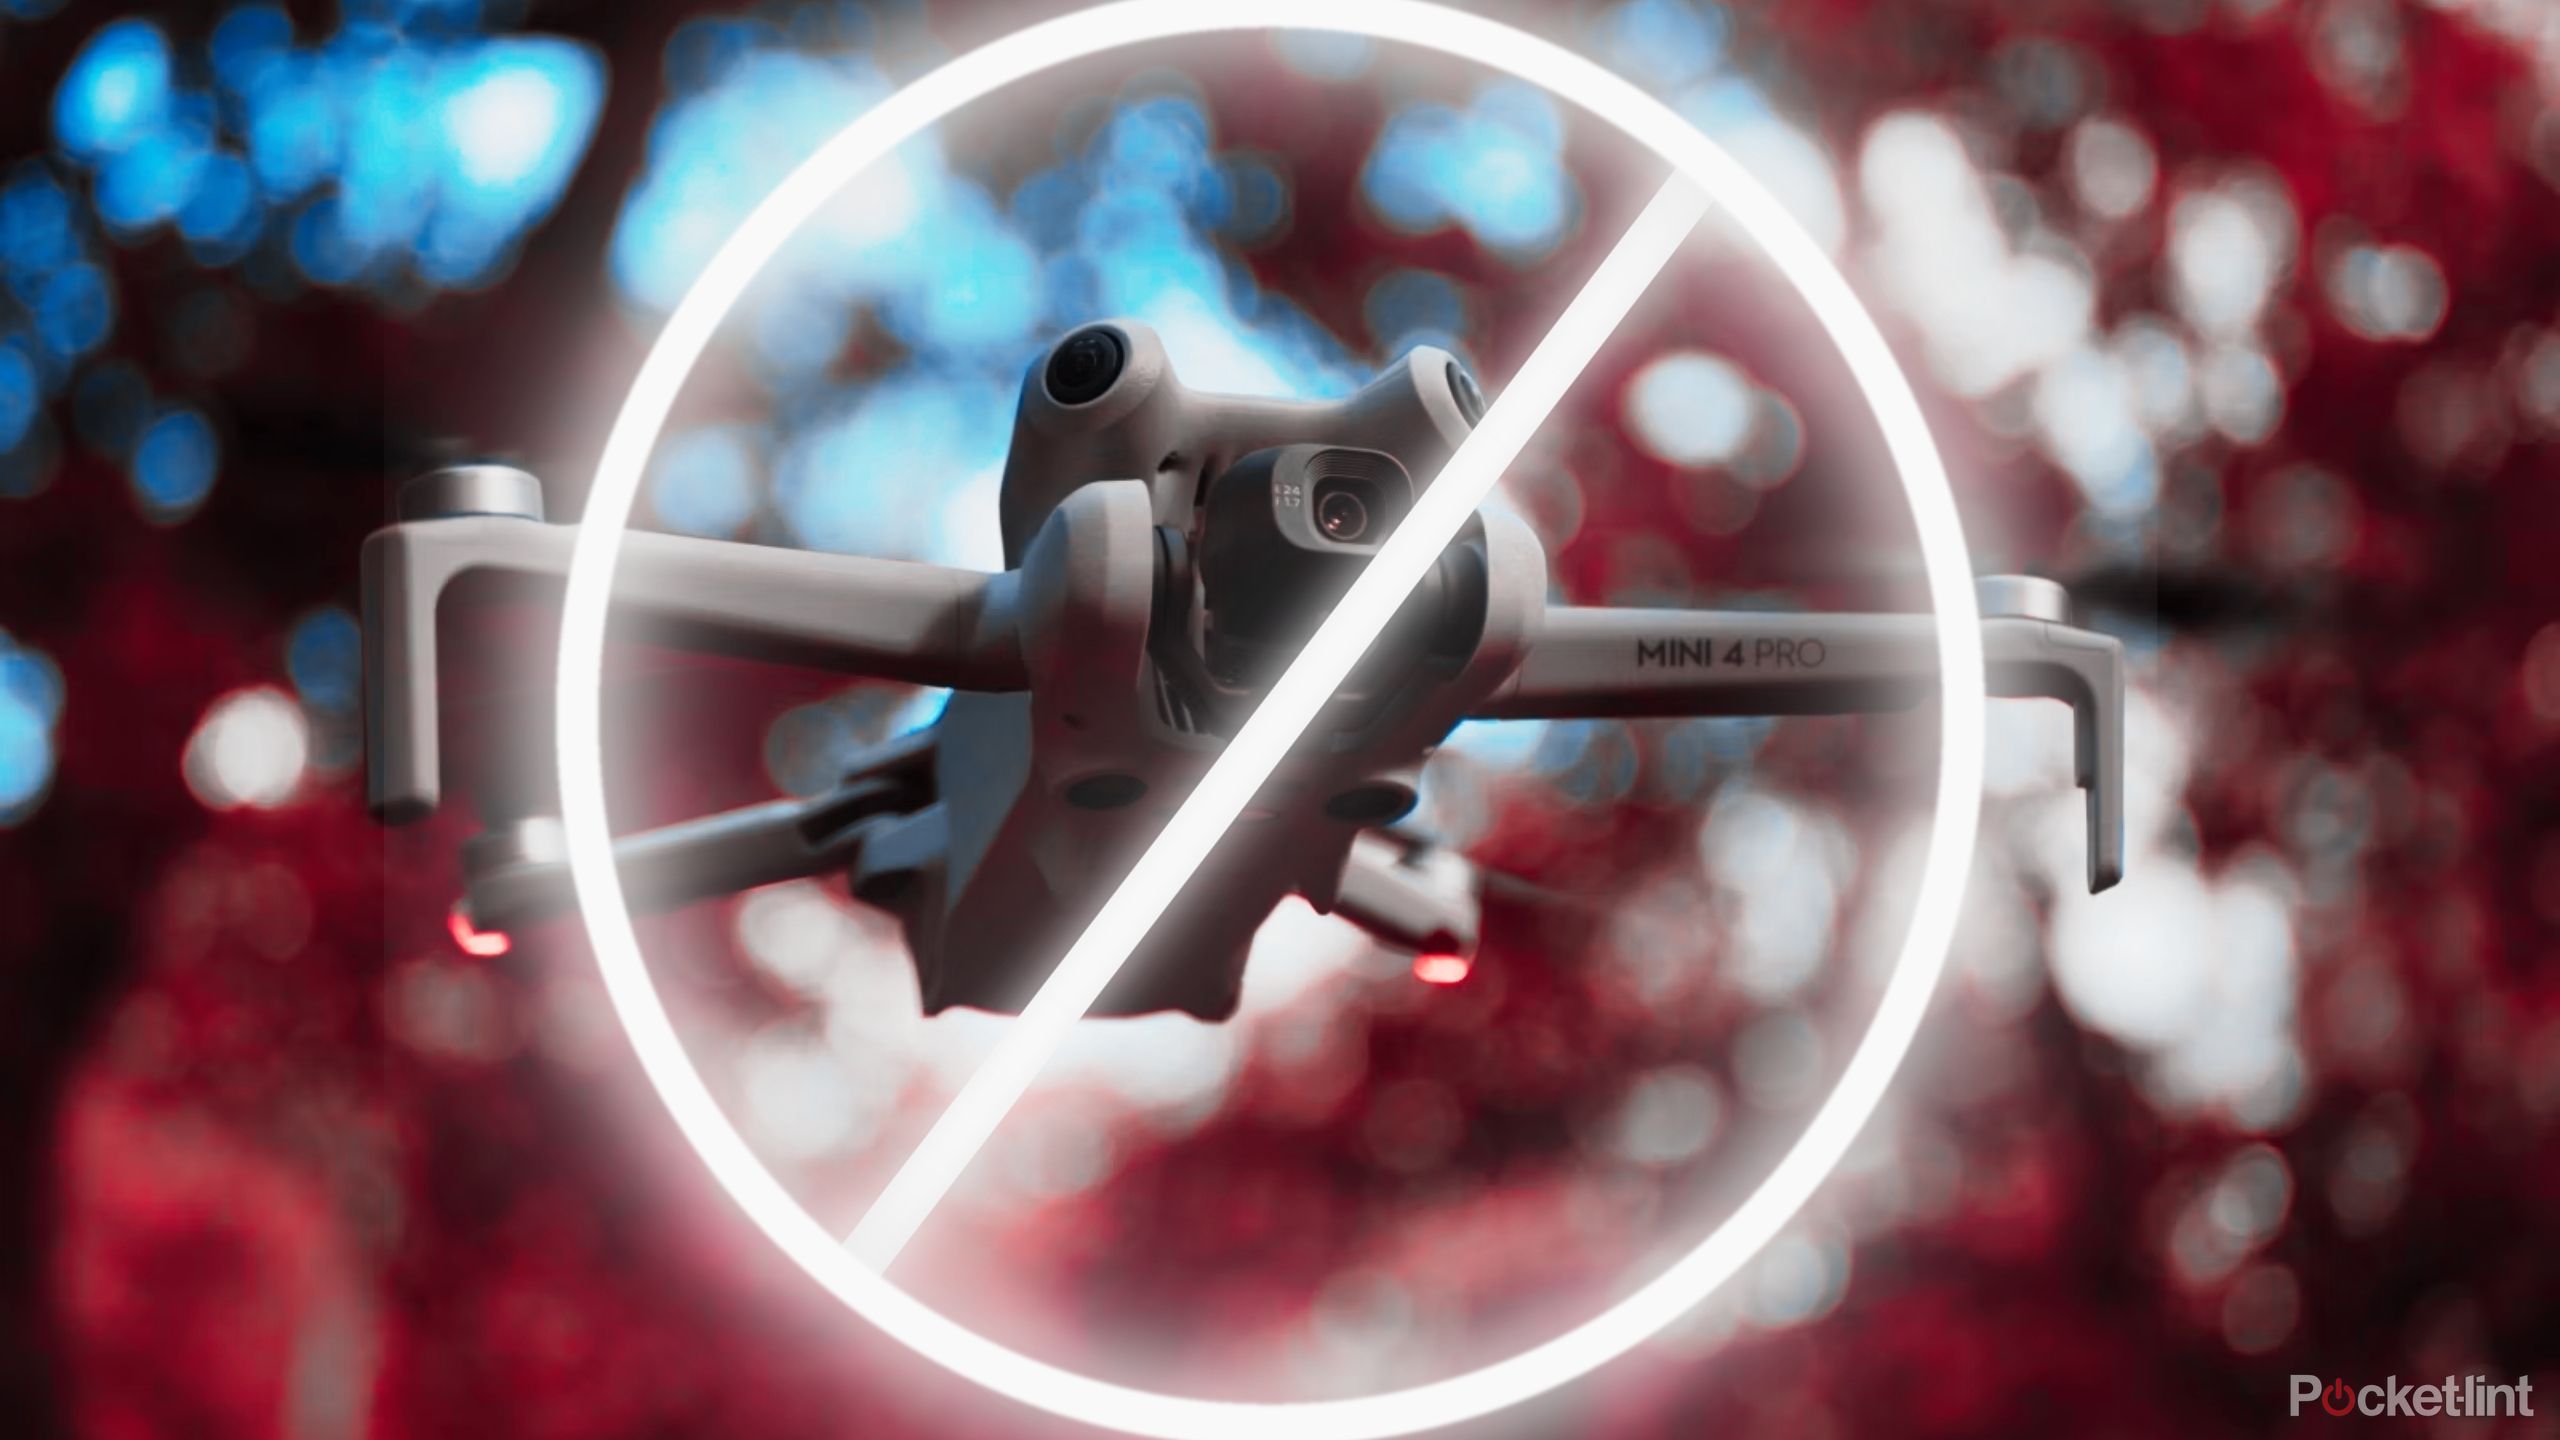 The US might ban DJI drones next